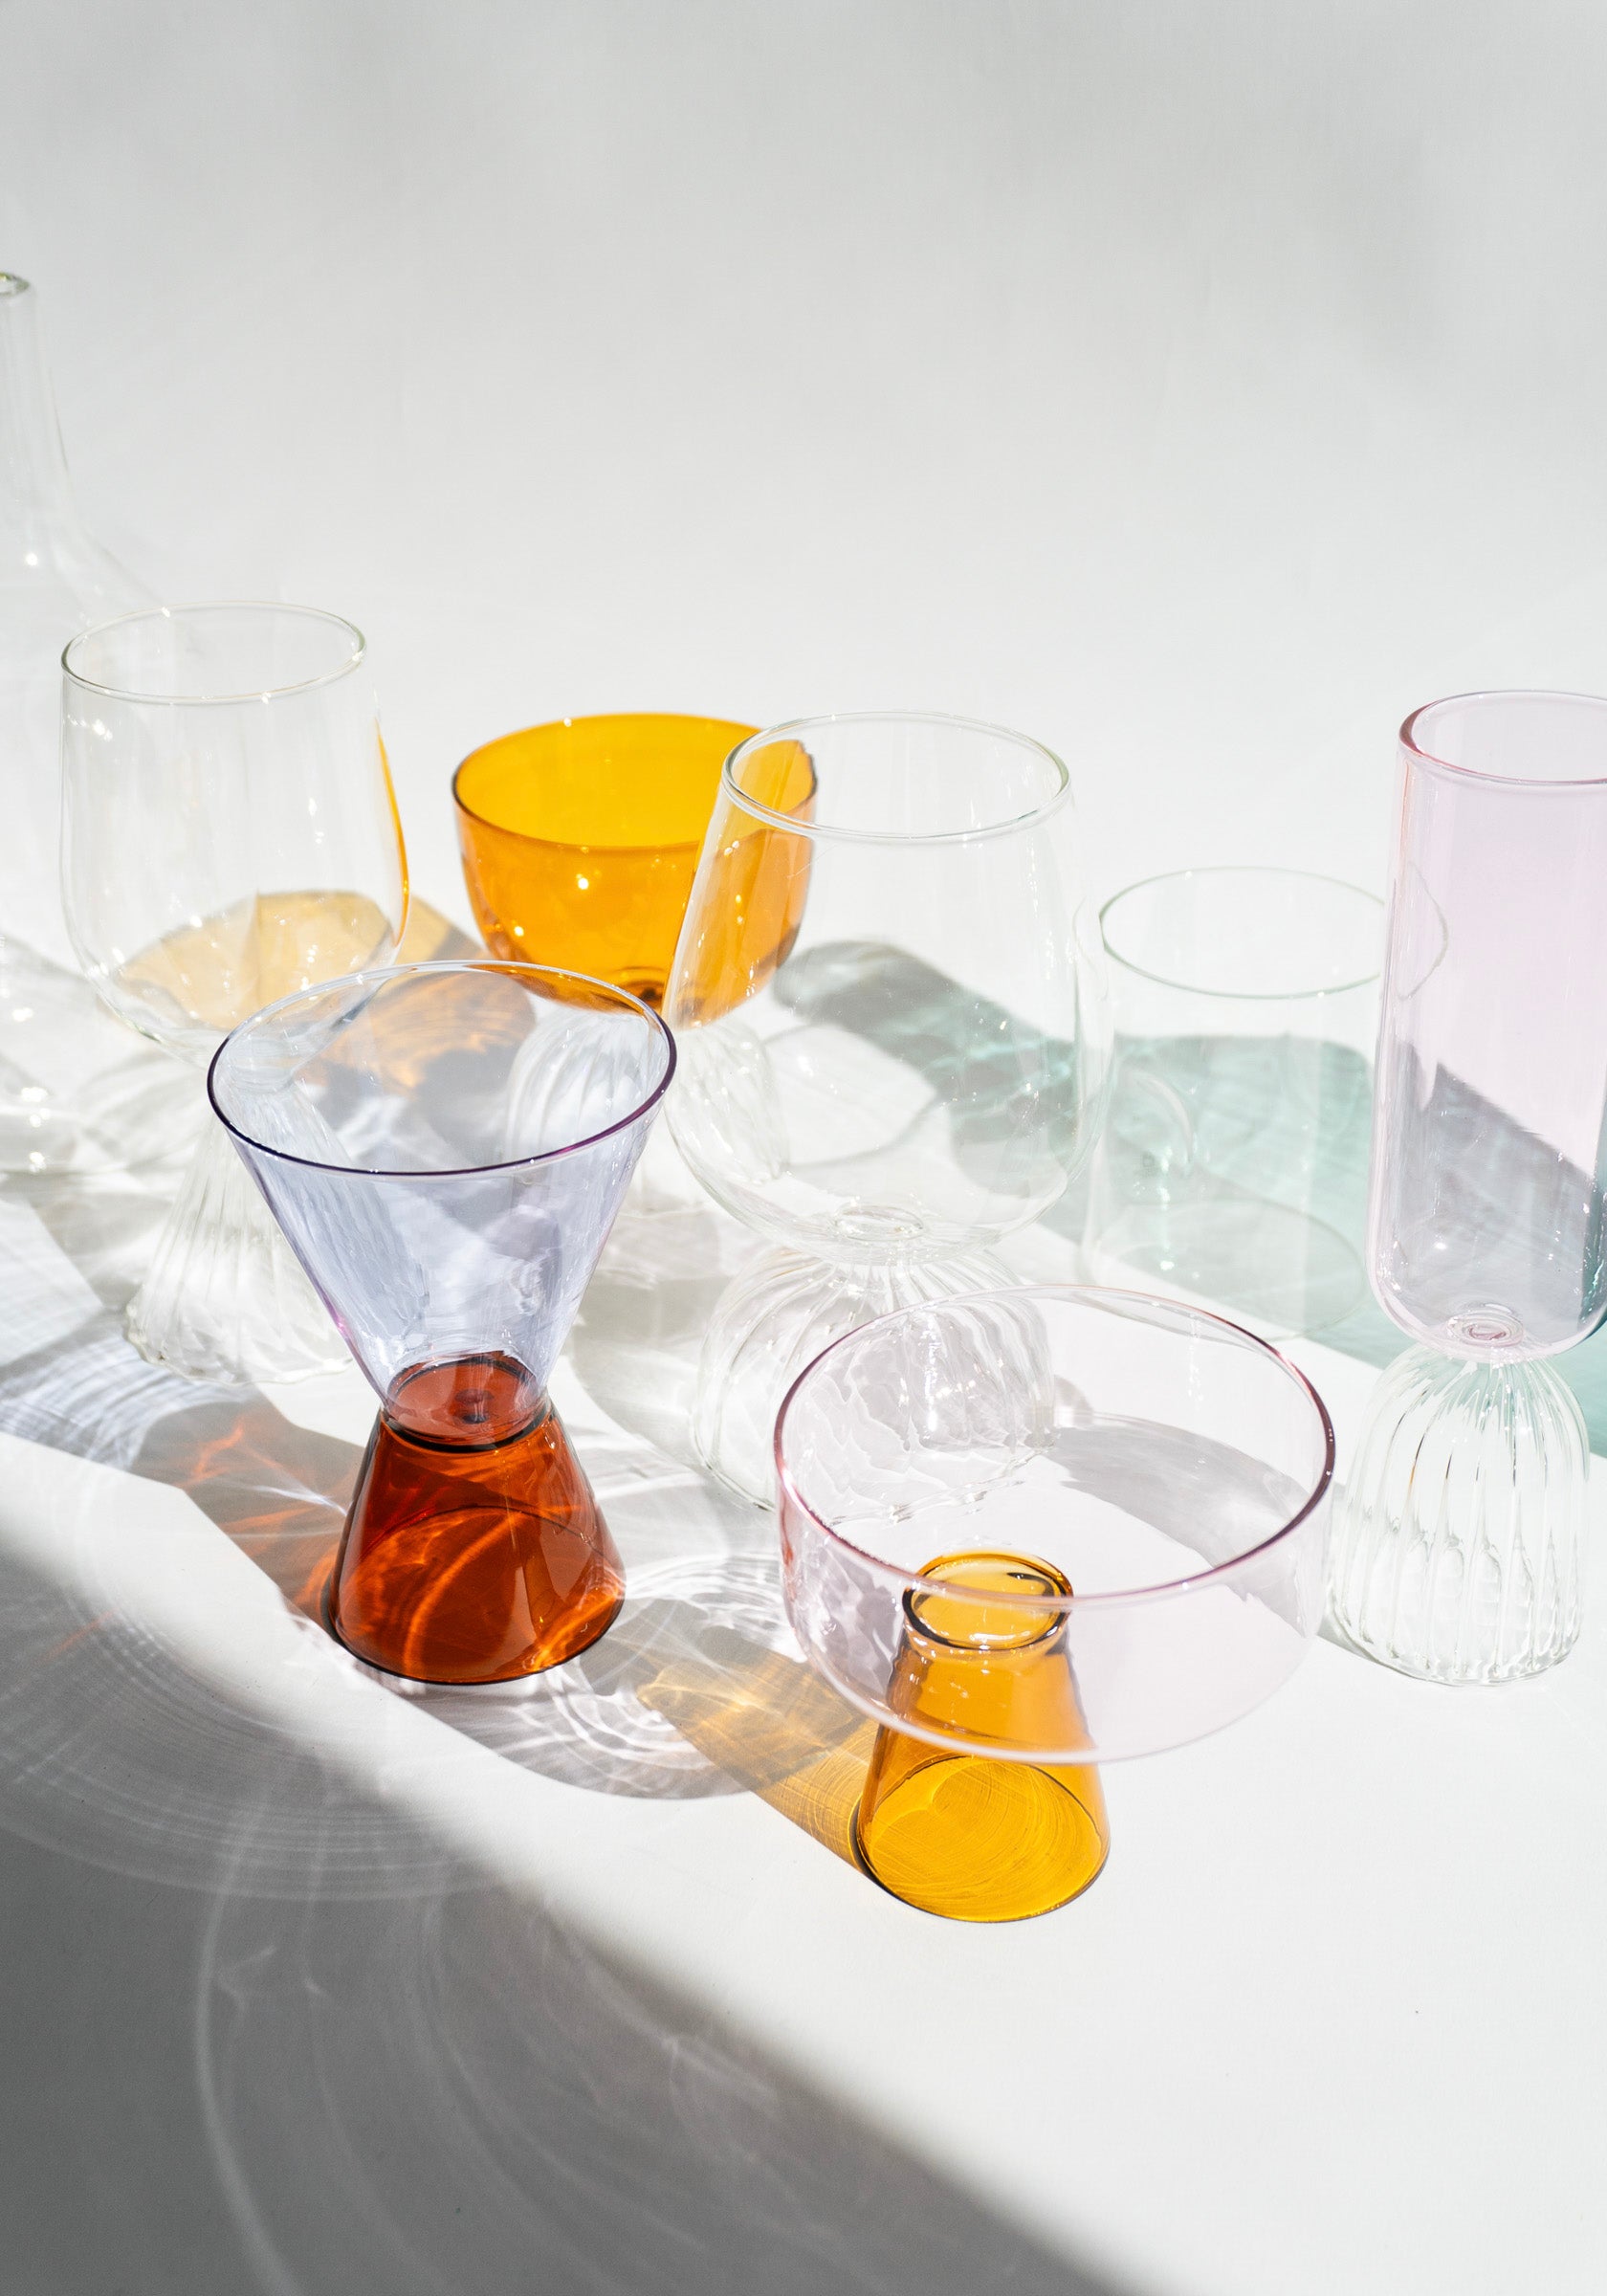 Travasi Glass in Amber & Lilac